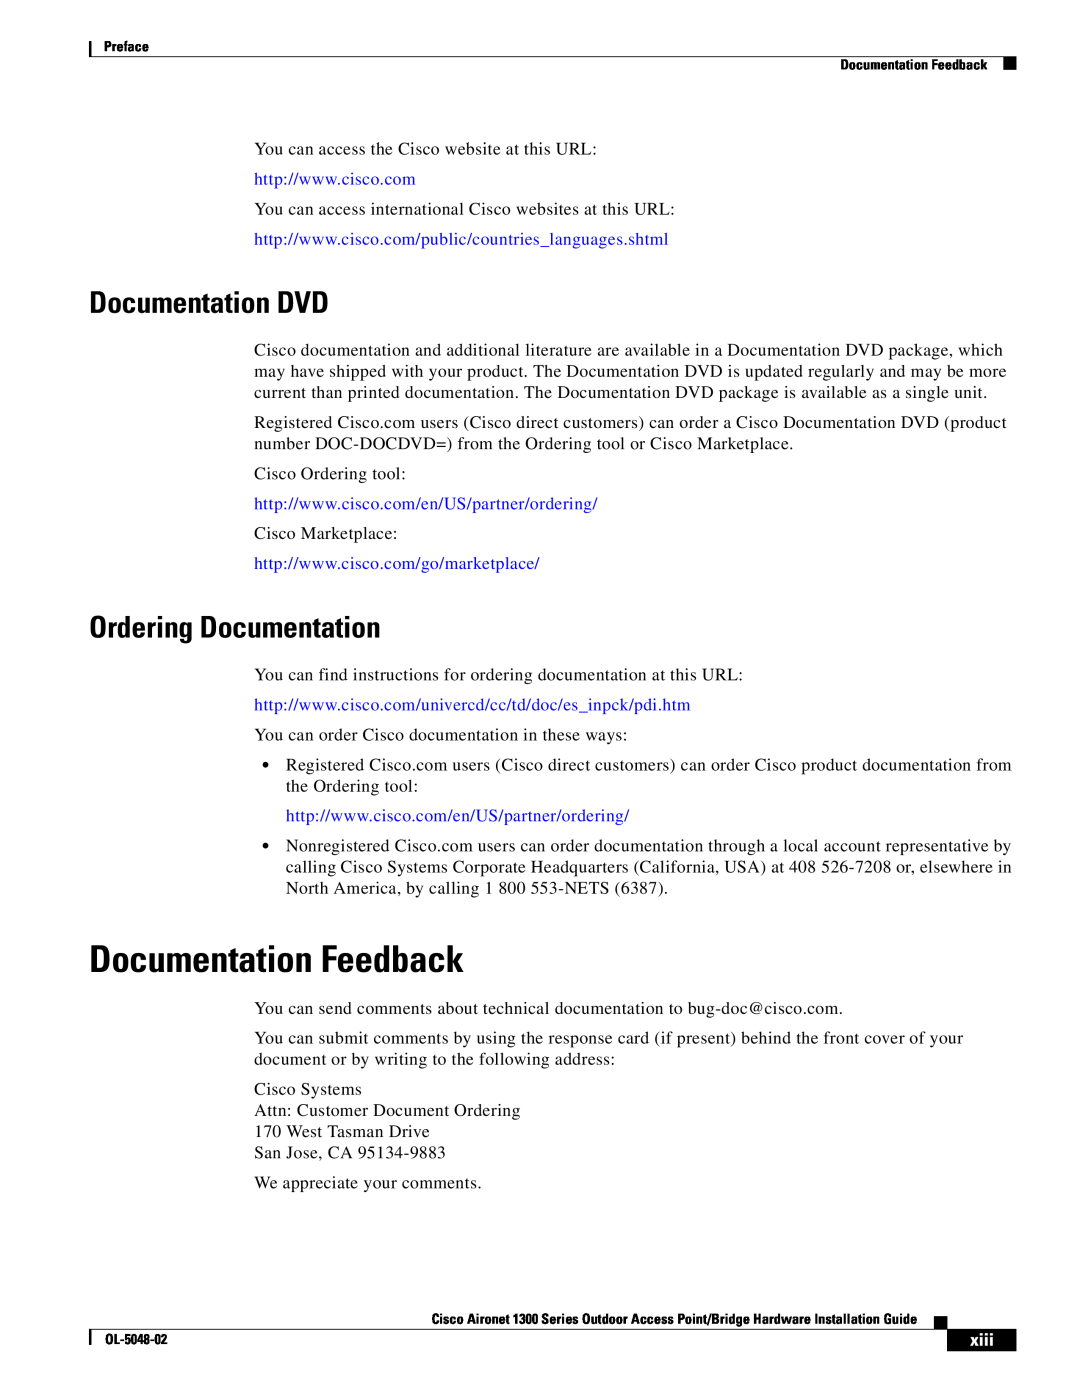 Cisco Systems 1300 Series manual Documentation Feedback, Documentation DVD, Ordering Documentation, xiii 